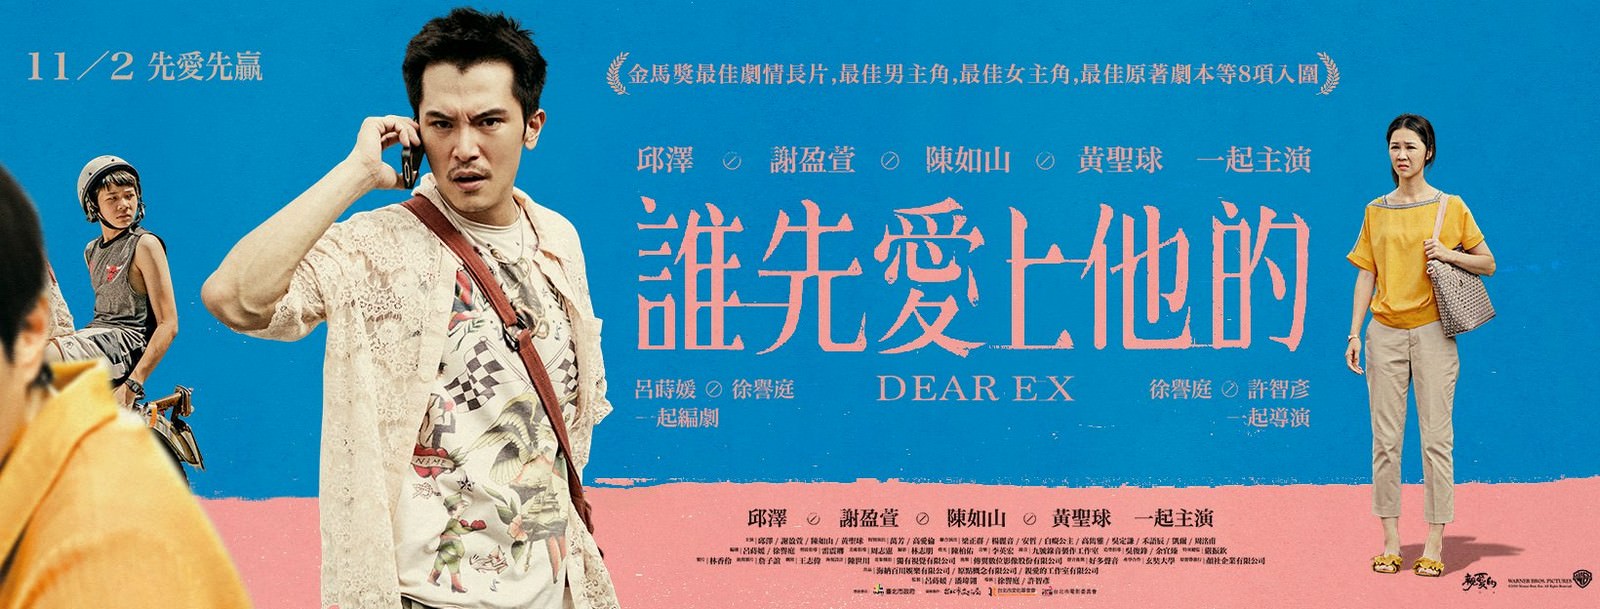 Movie, 誰先愛上他的(台灣, 2018年) / Dear EX(英文), 電影海報, 台灣, 橫版